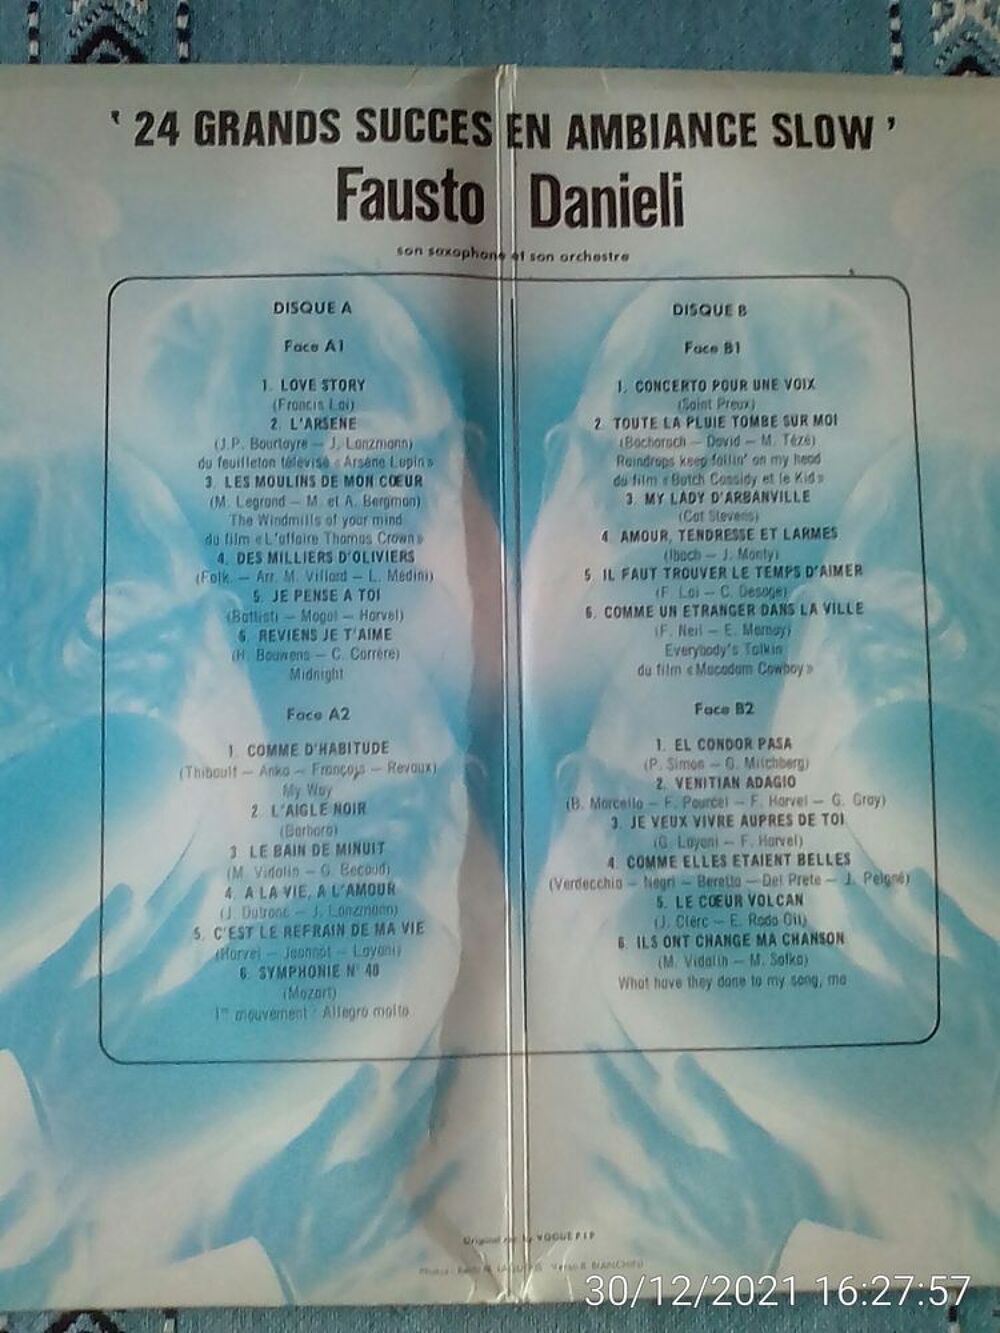 Vinyle 33T AMBIANCE SLOW-FAUSTO DANIELI CD et vinyles